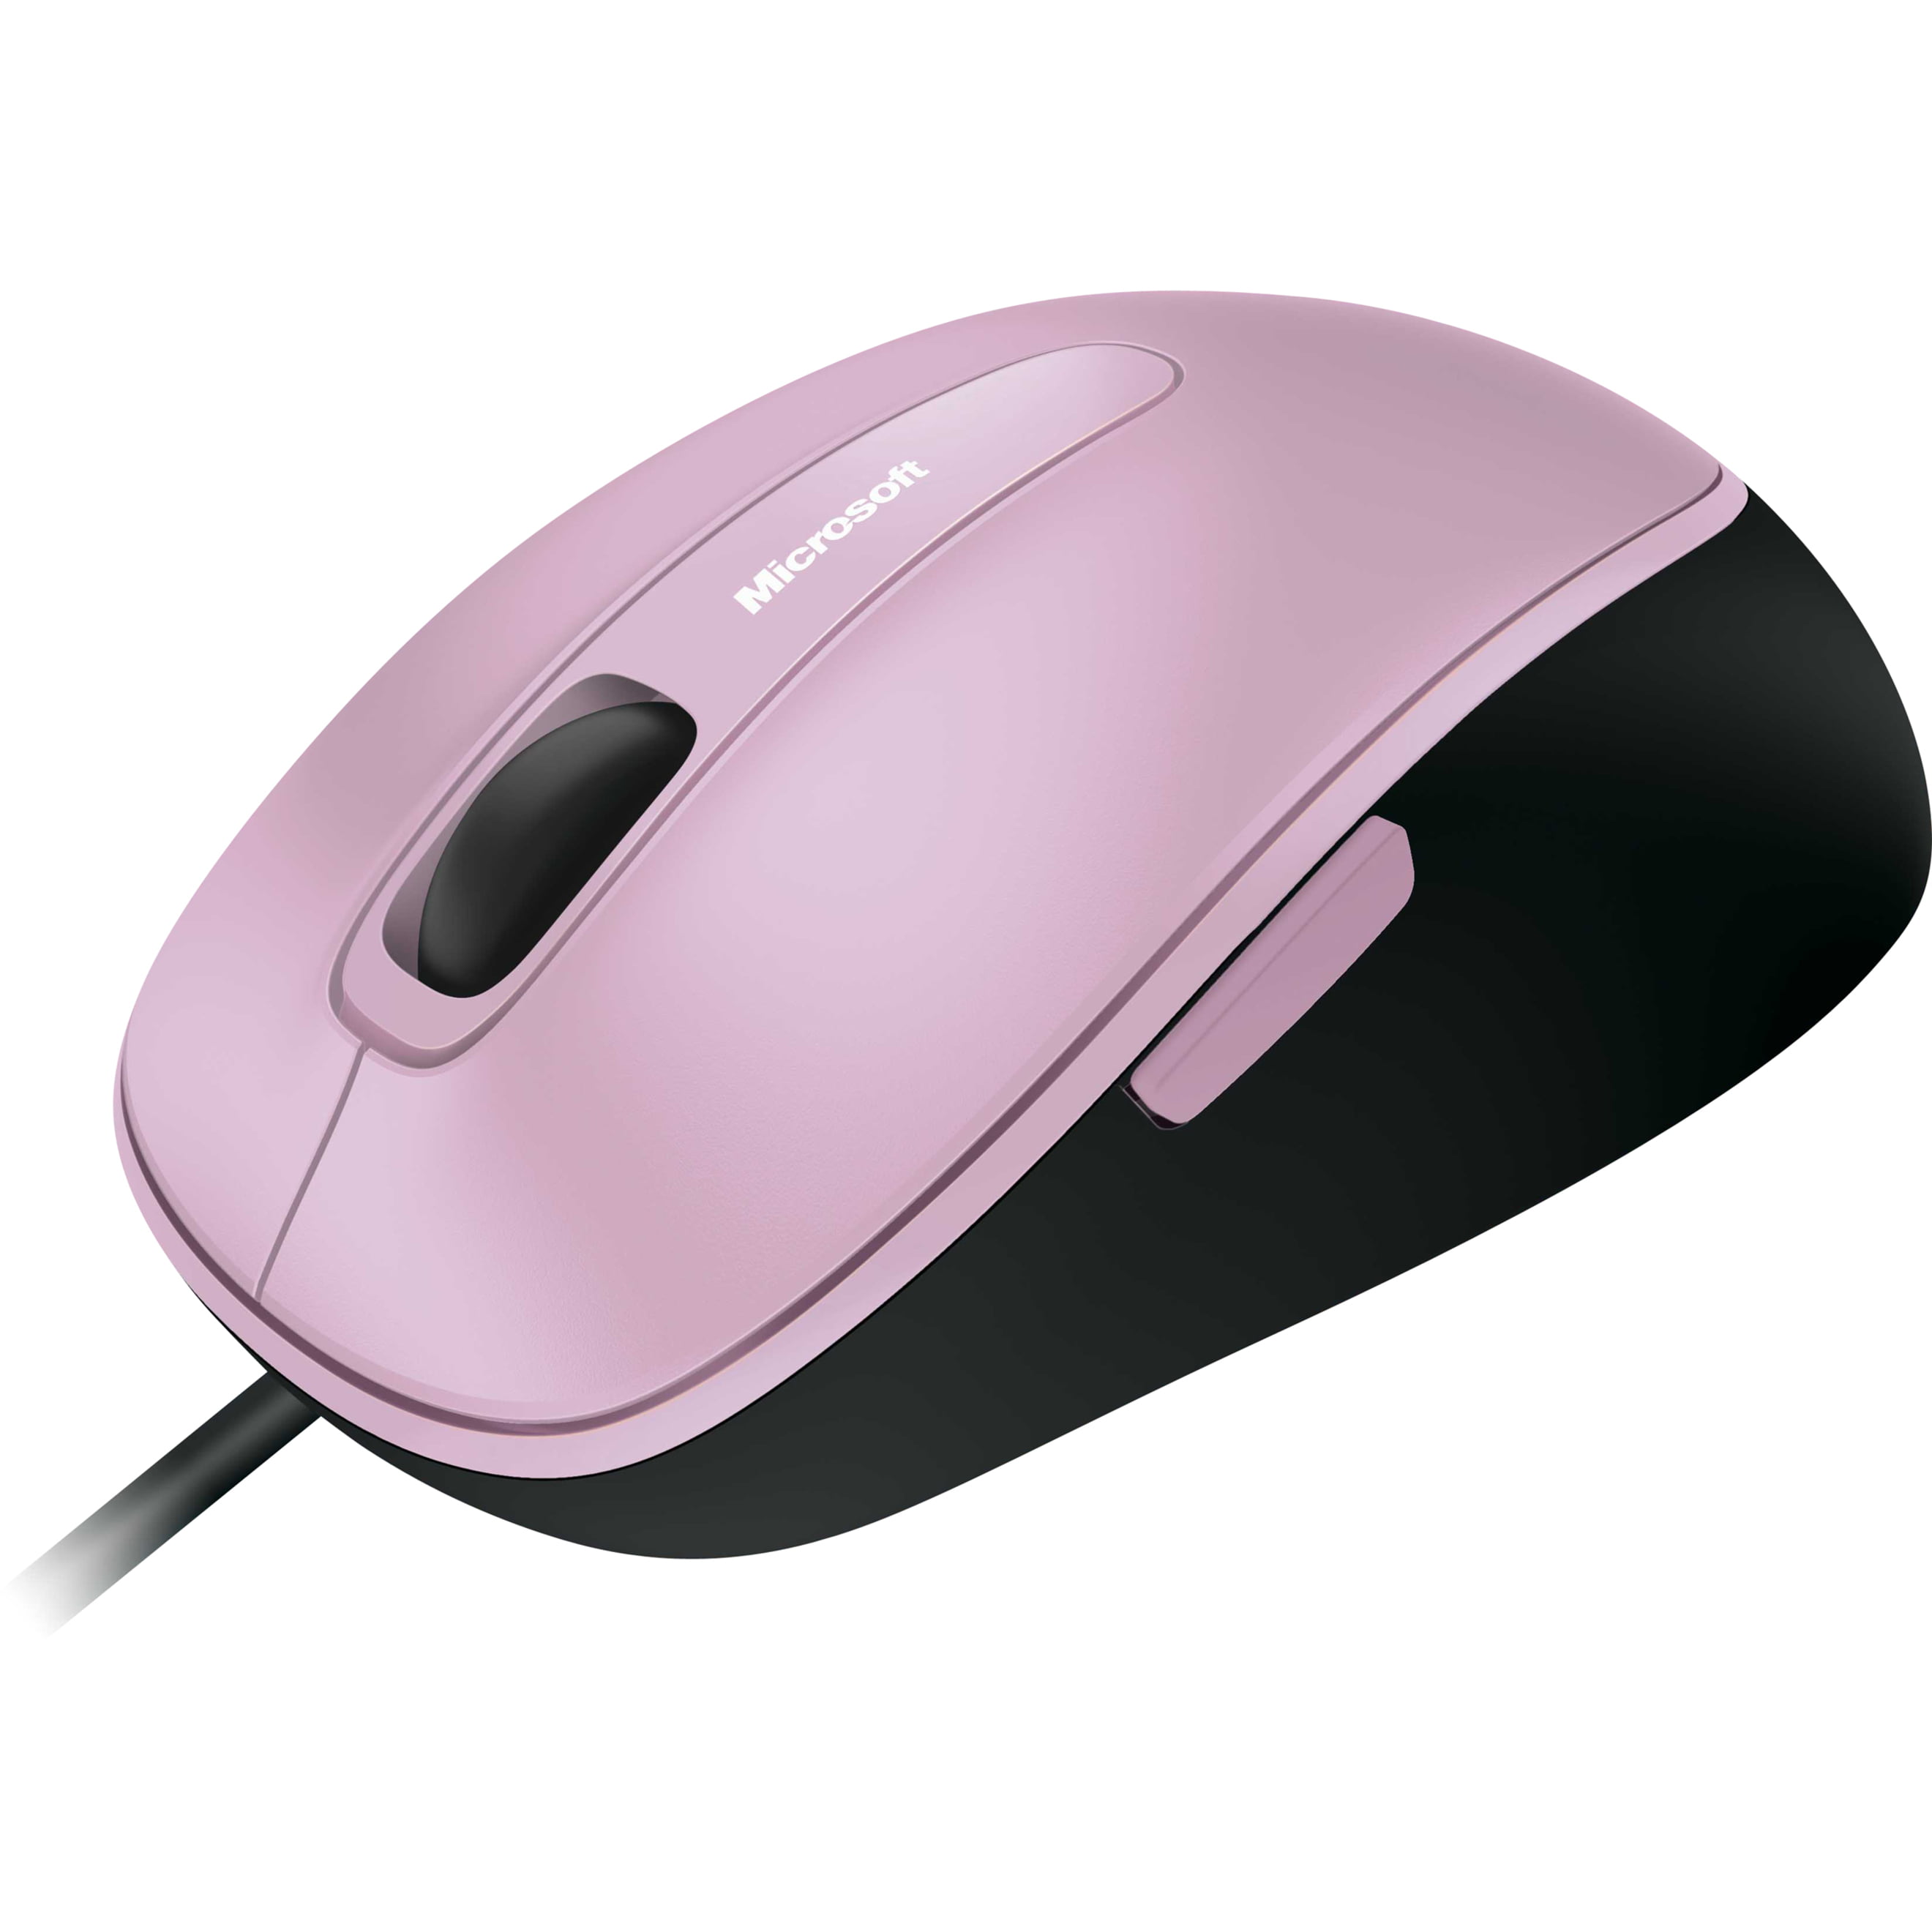 Microsoft Comfort 4500. Microsoft Comfort Mouse. Мышь комфорт 4500. Microsoft Mouse 2000. F mice